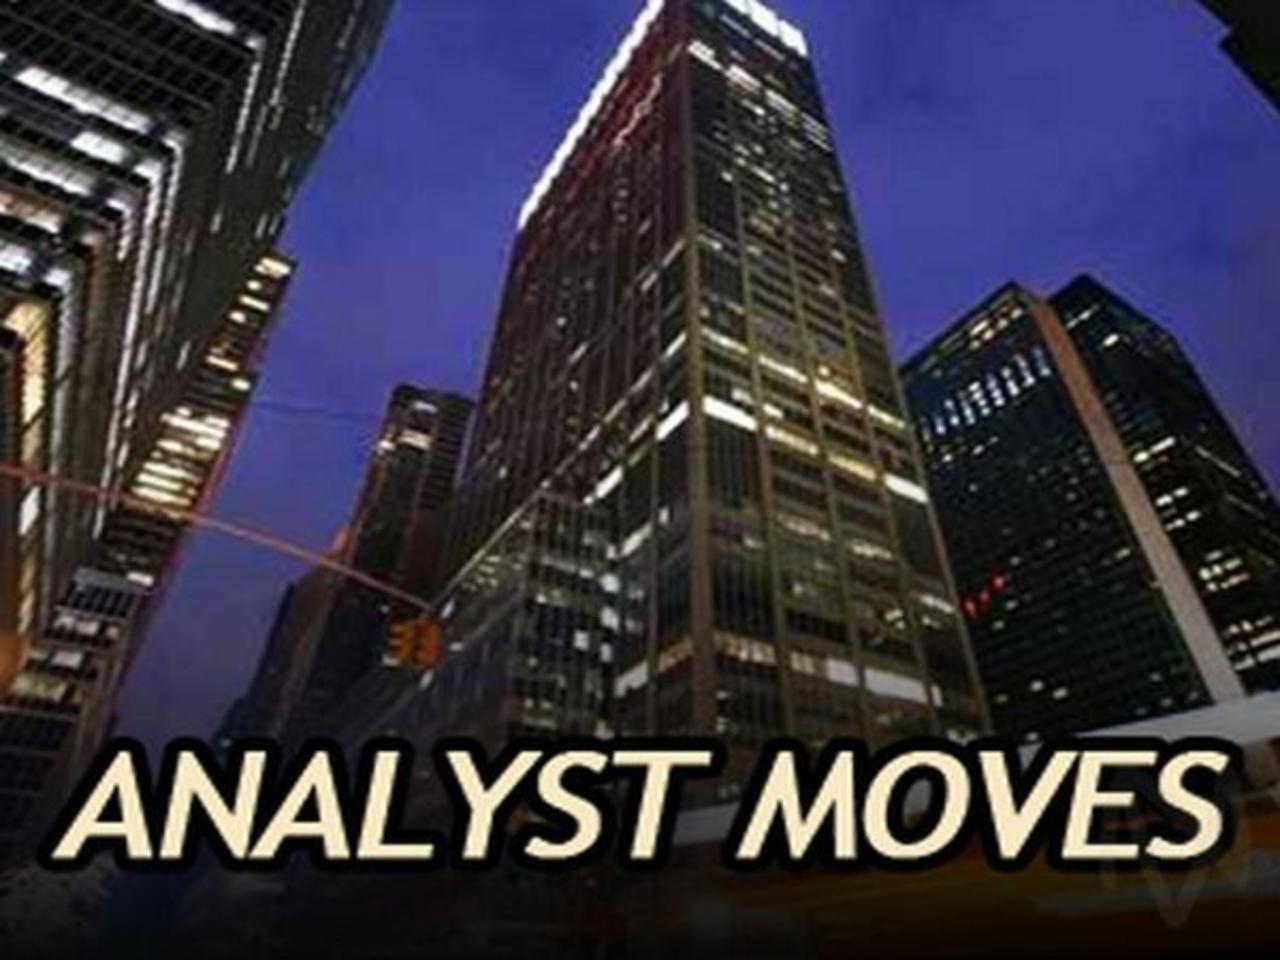 S&P 500 Analyst Moves: GNRC